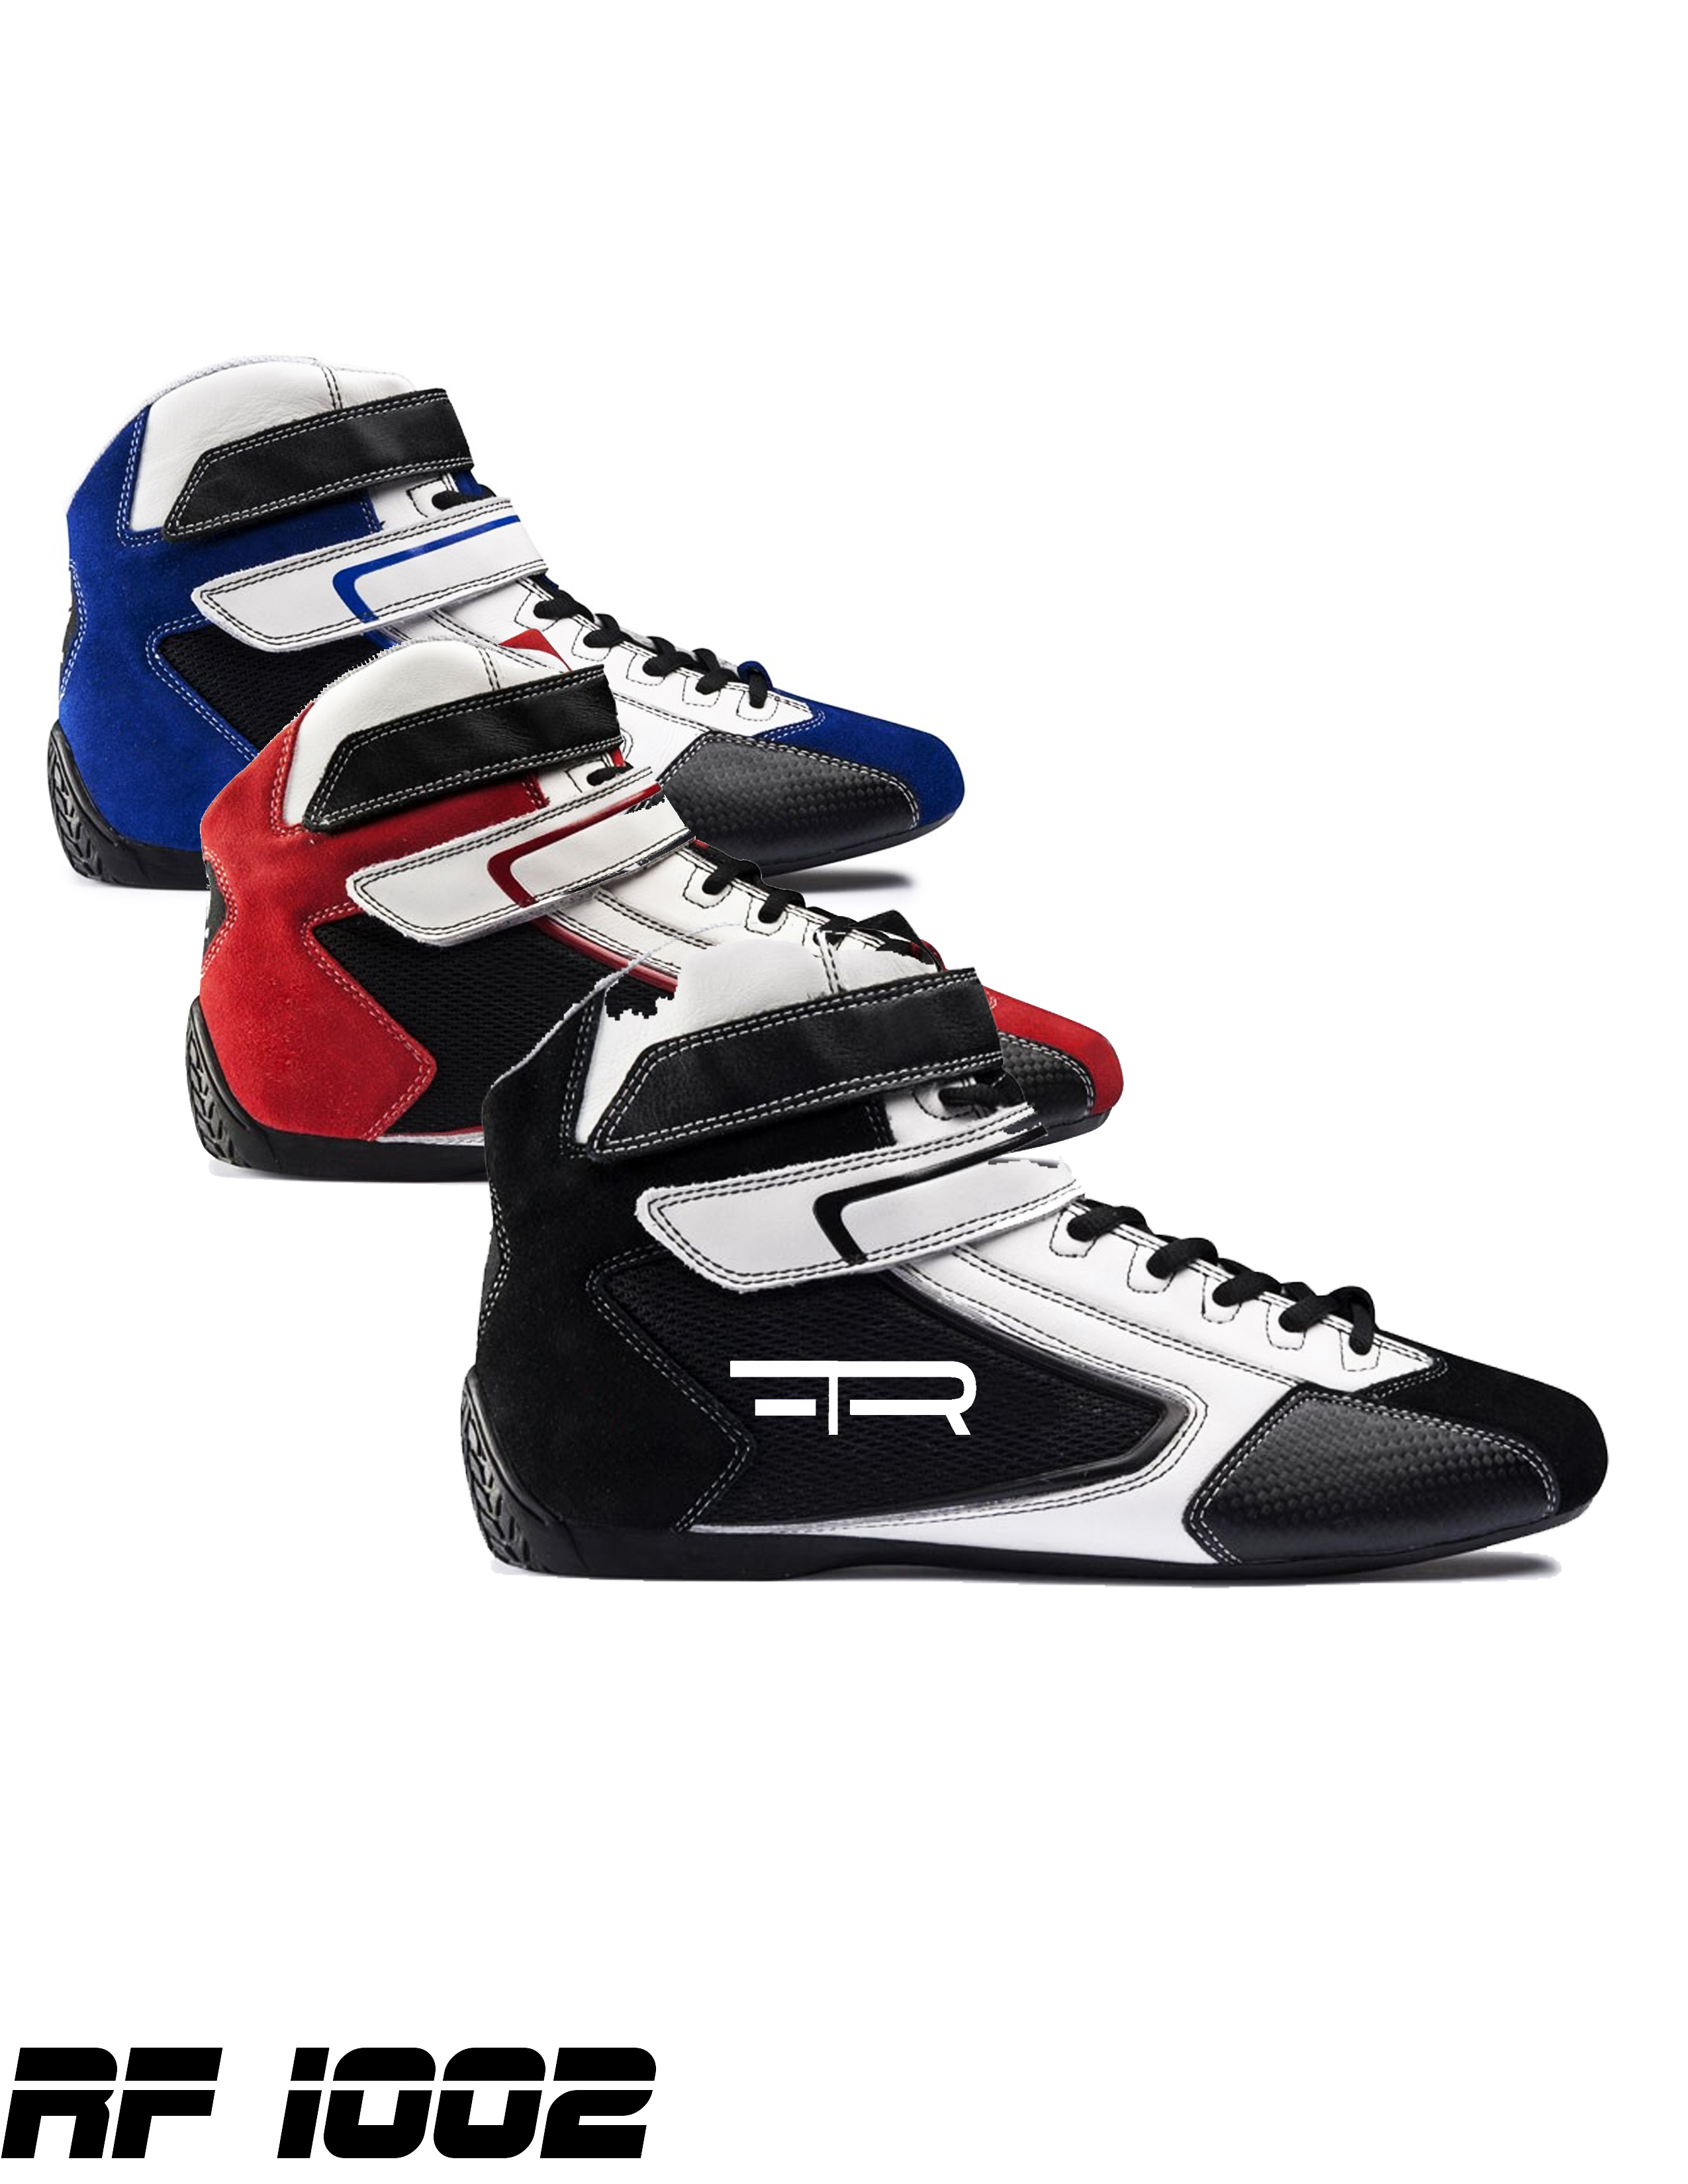 kart racing shoes 